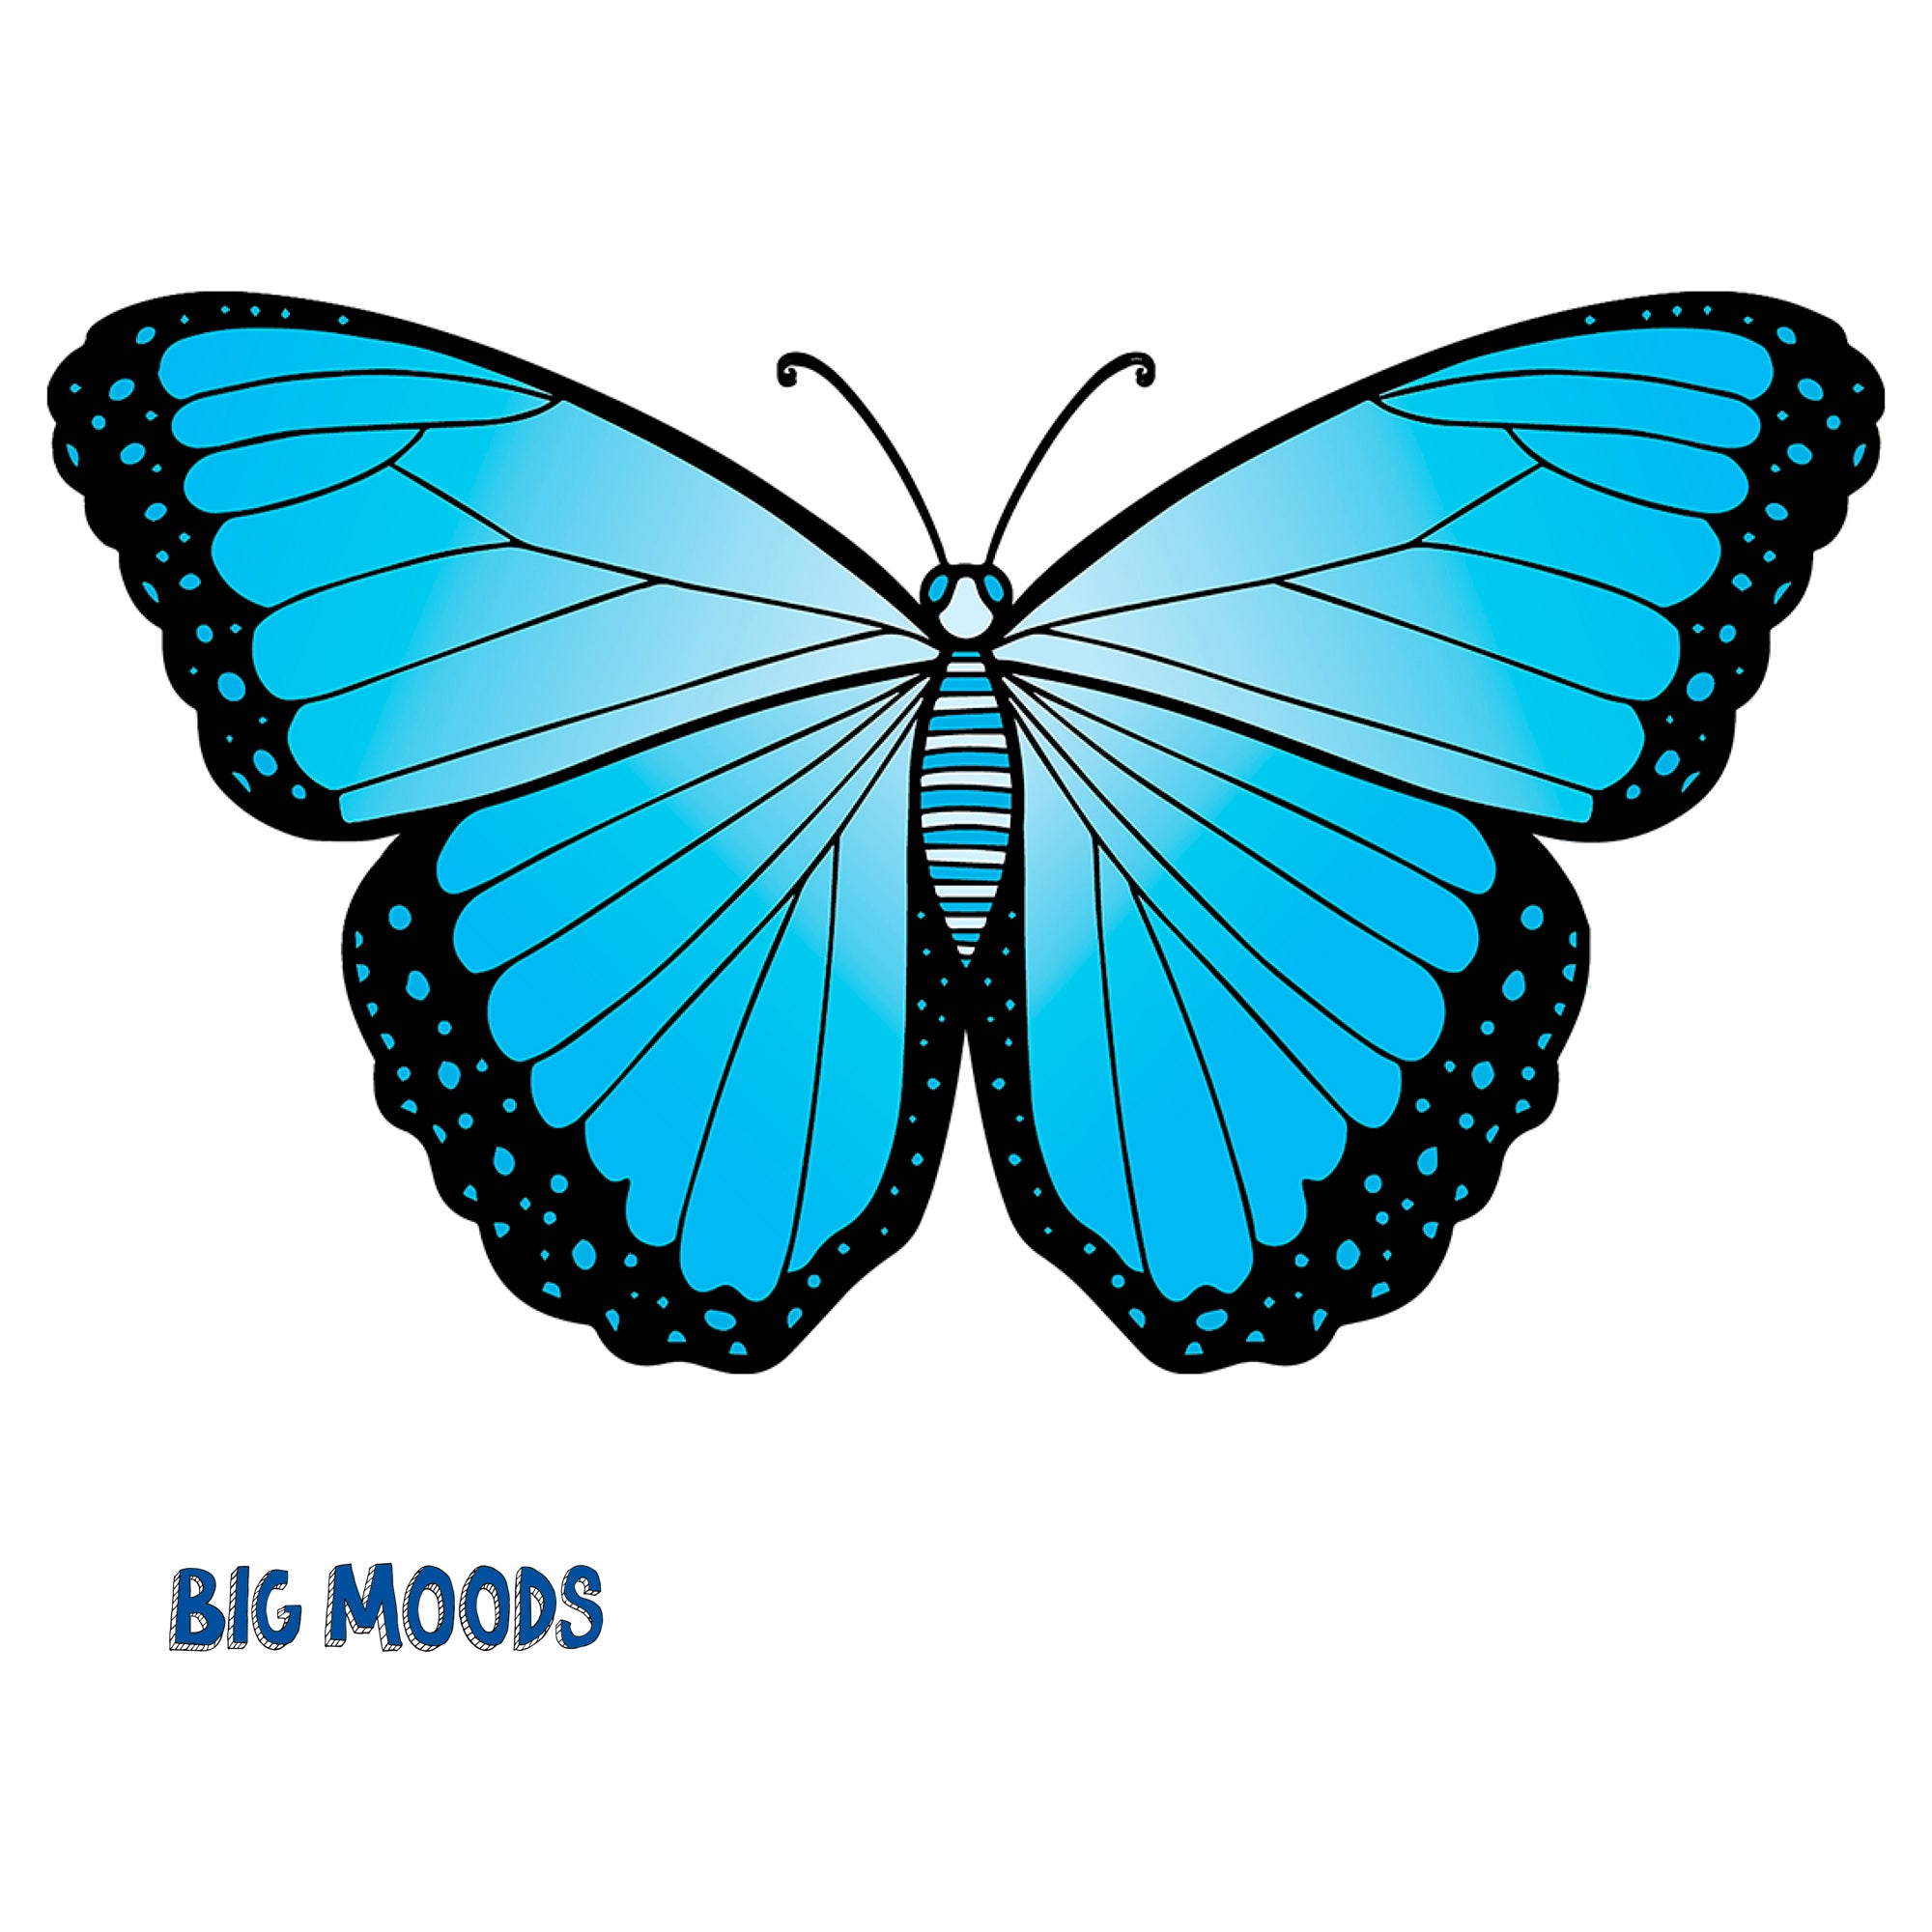 Master Butterfly Drawings in 5 Simple Steps - Full Bloom Club